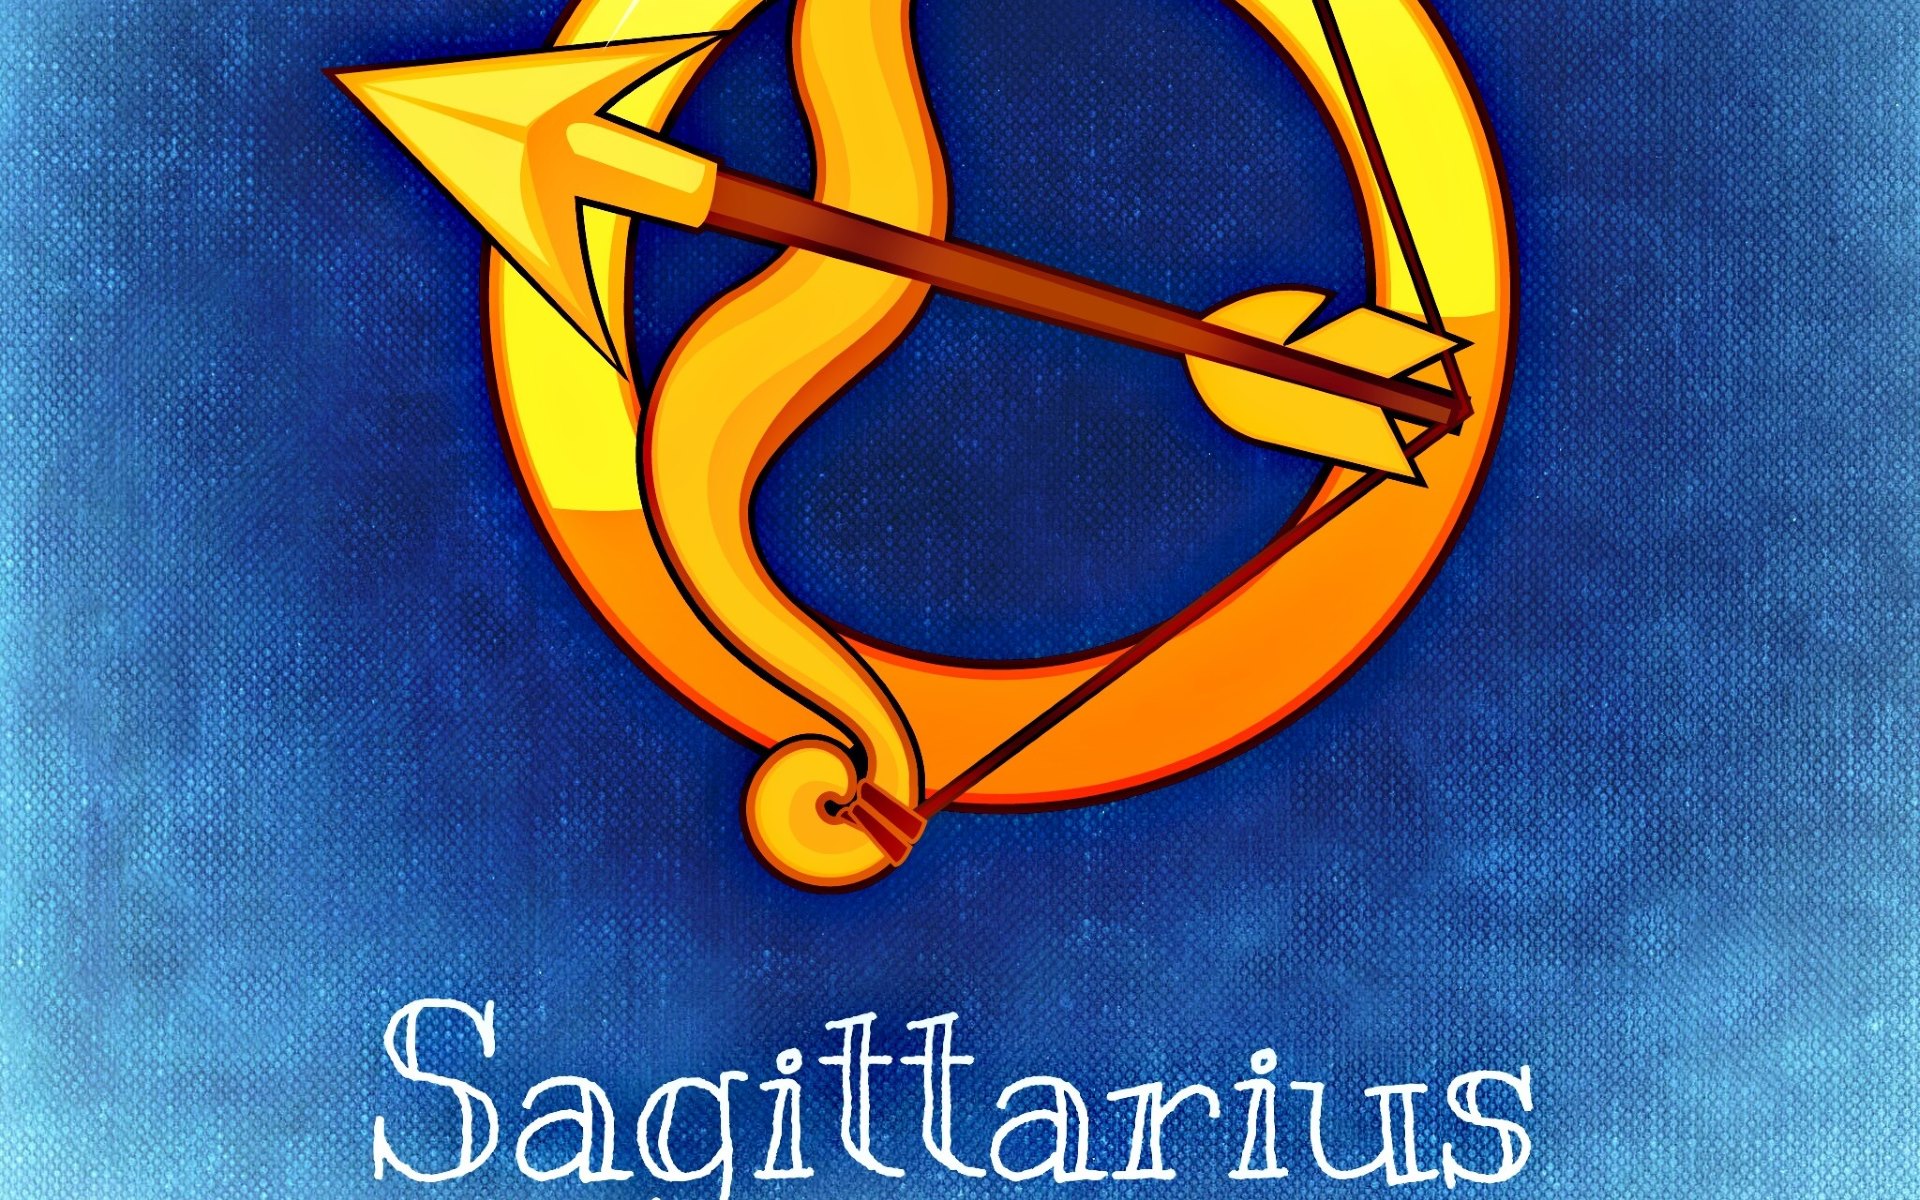 Horoscope - Sagittarius by Alexas_Fotos